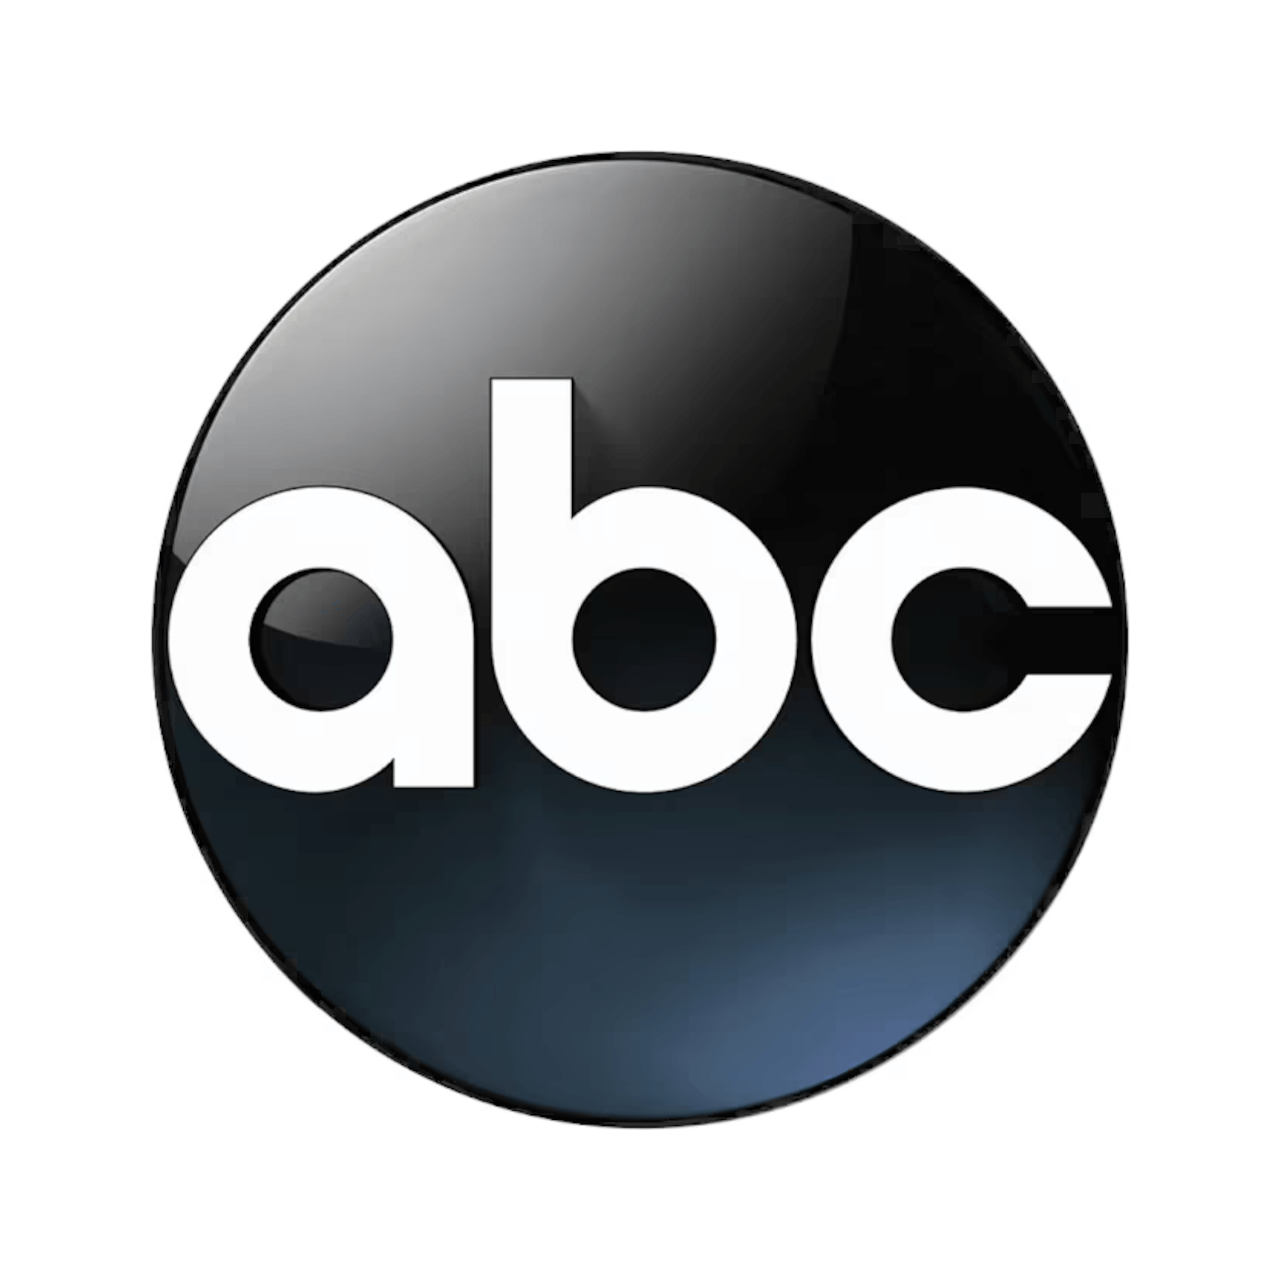 ABC Logo.png